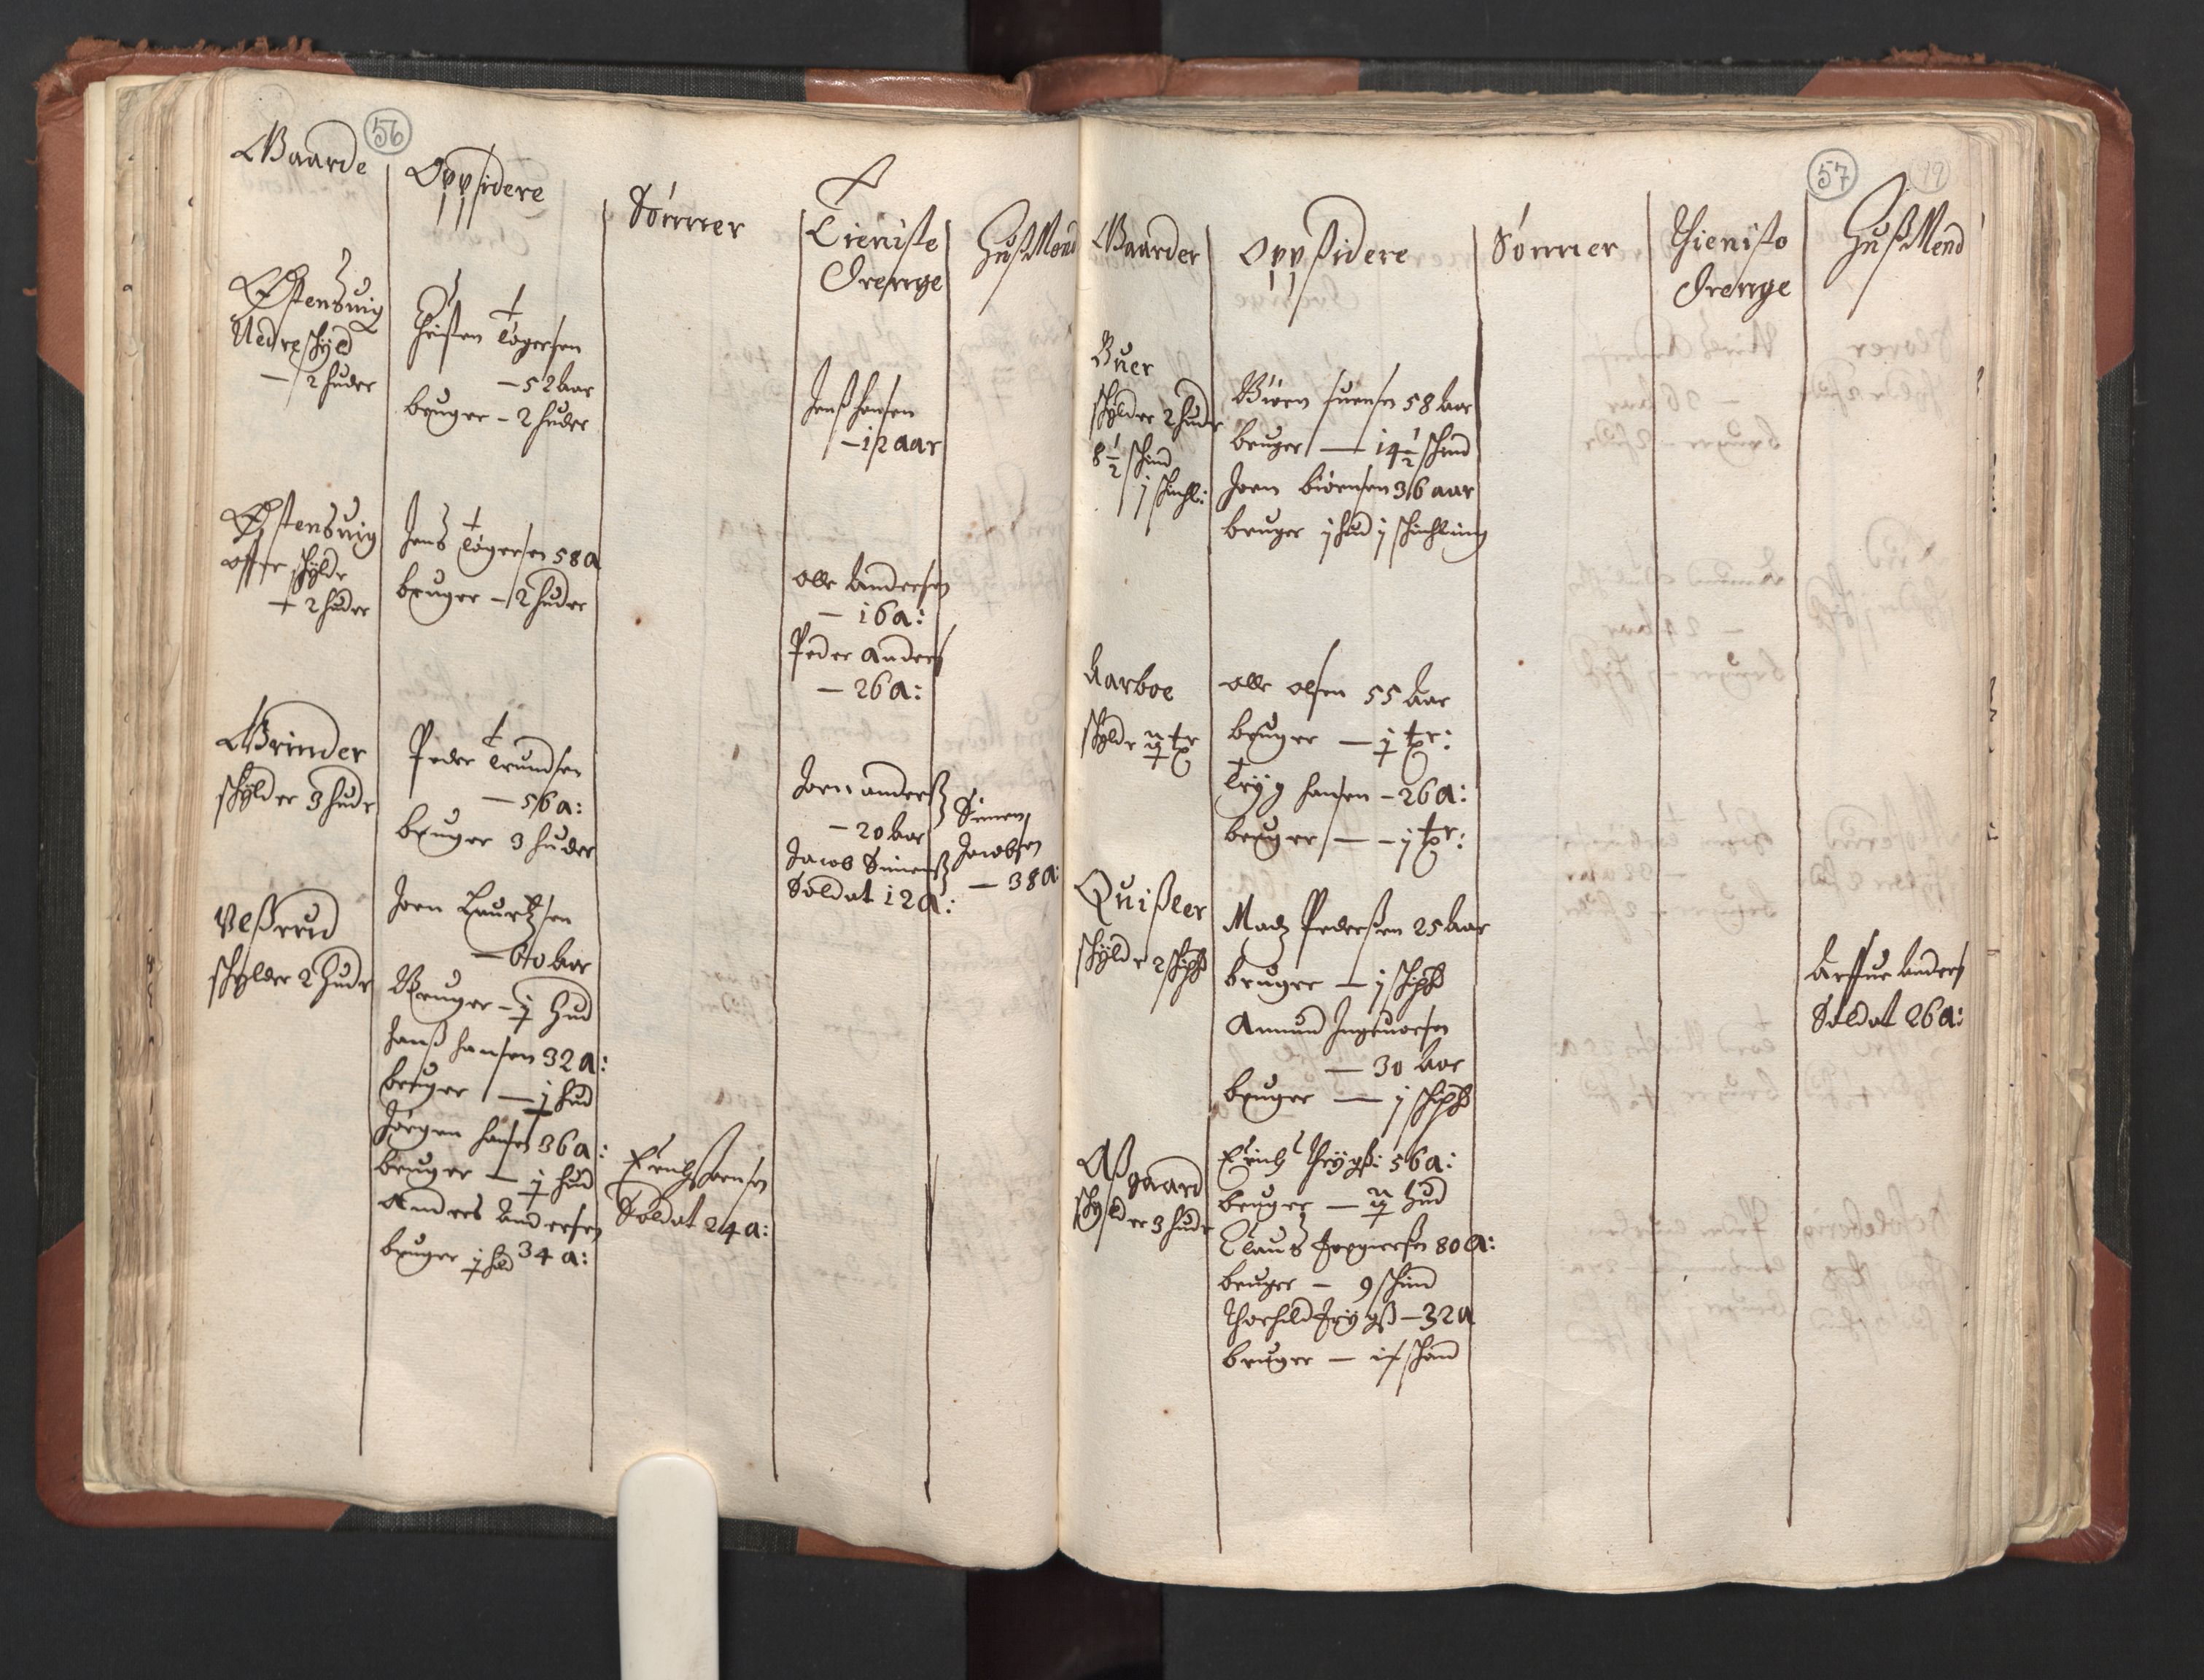 RA, Fogdenes og sorenskrivernes manntall 1664-1666, nr. 1: Fogderier (len og skipreider) i nåværende Østfold fylke, 1664, s. 56-57